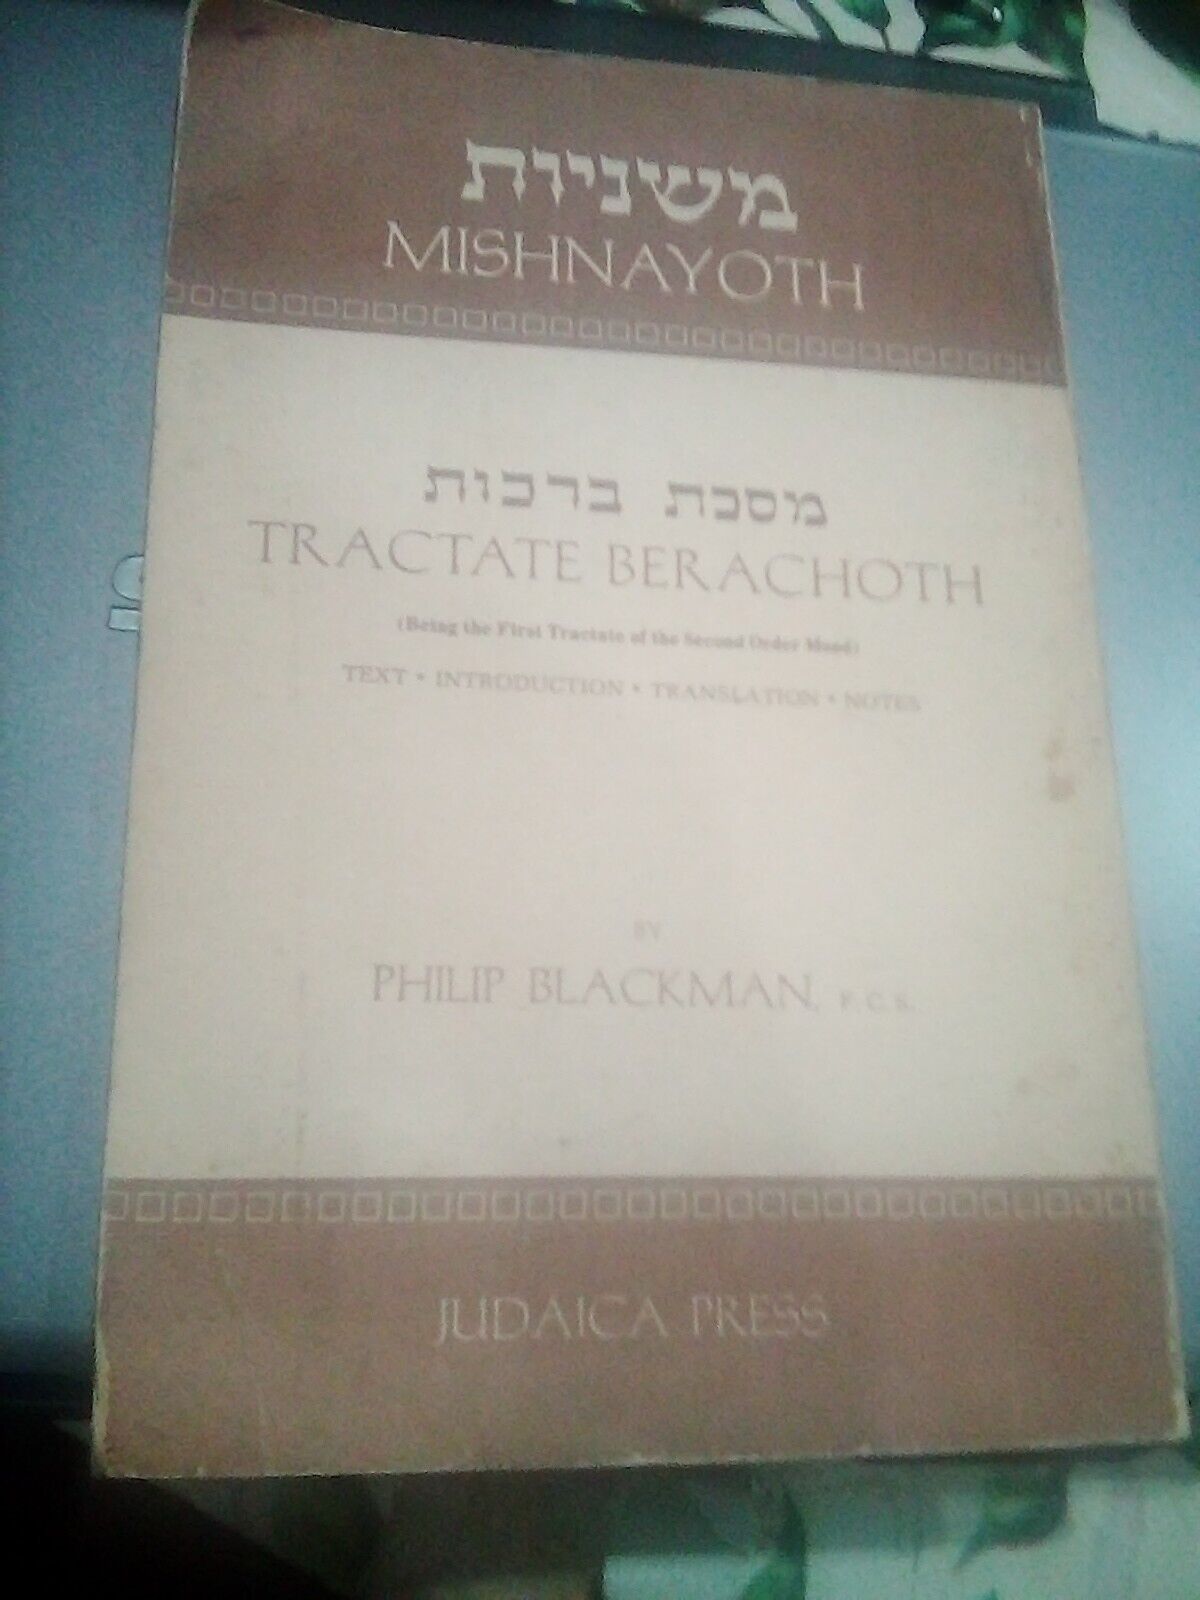 English Mishnayoth Tractate Berachoth, by Philip Blackman משניות מסכת ברכות